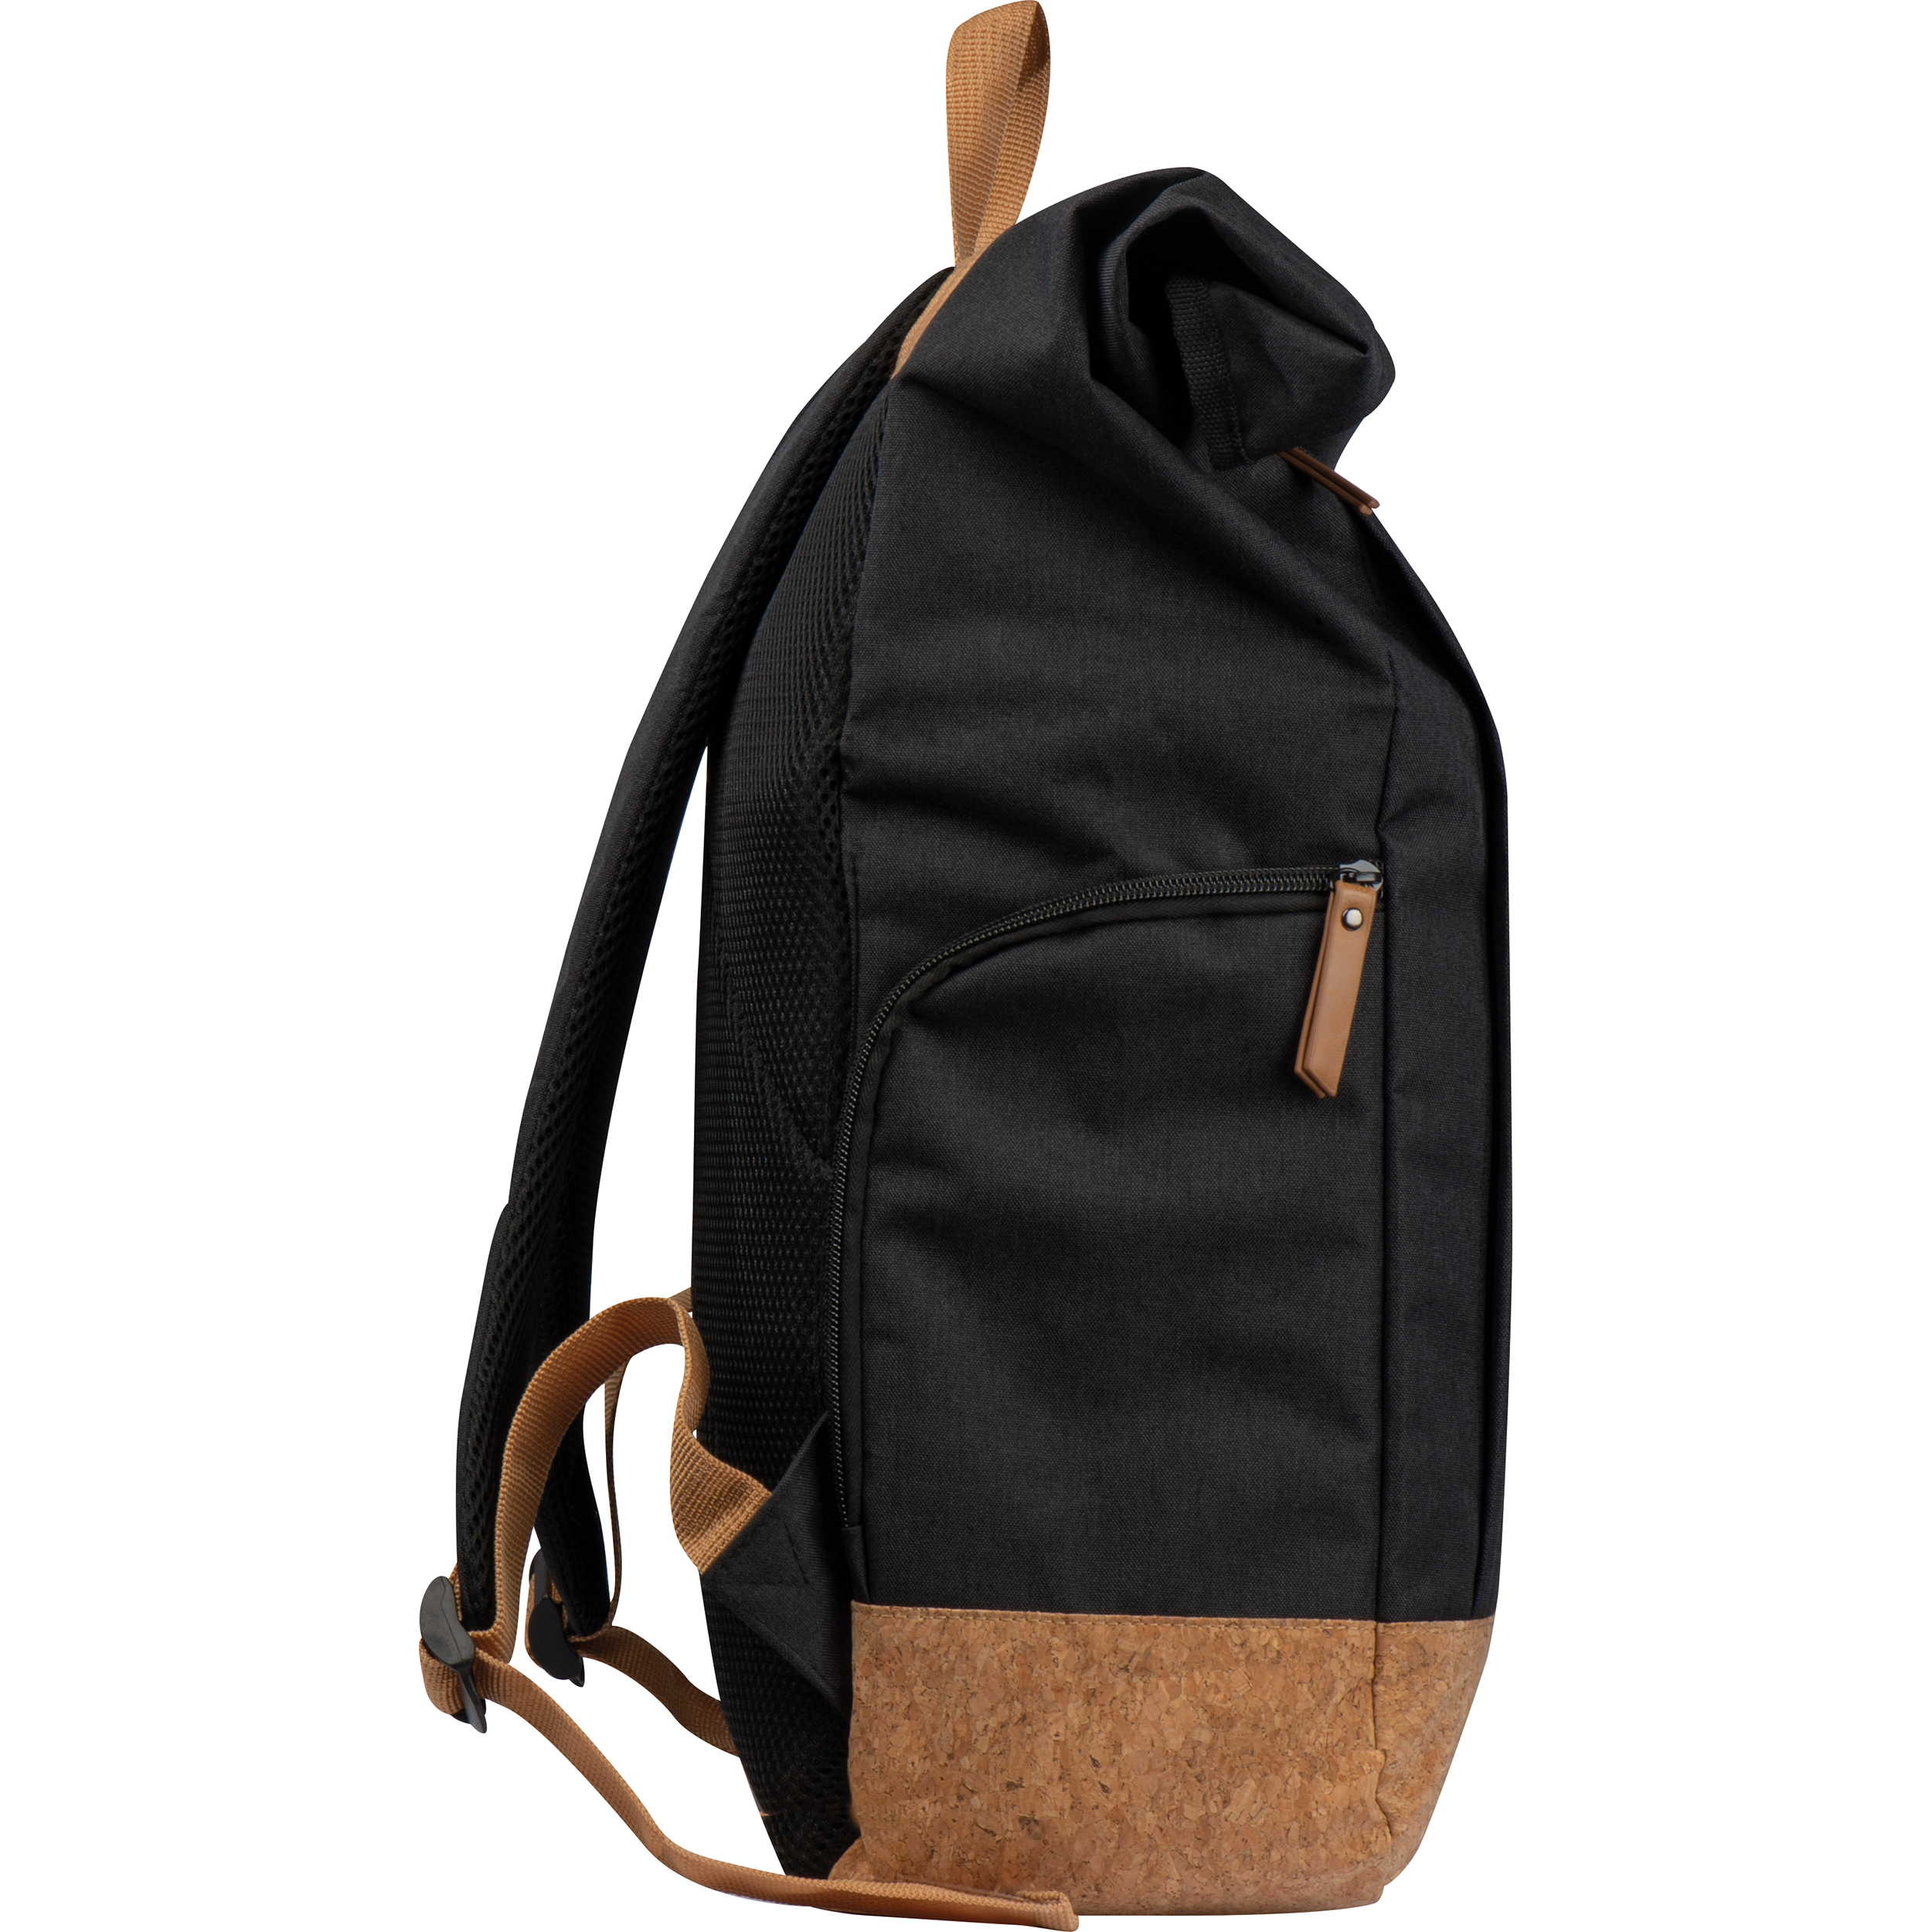 RPET Backpack